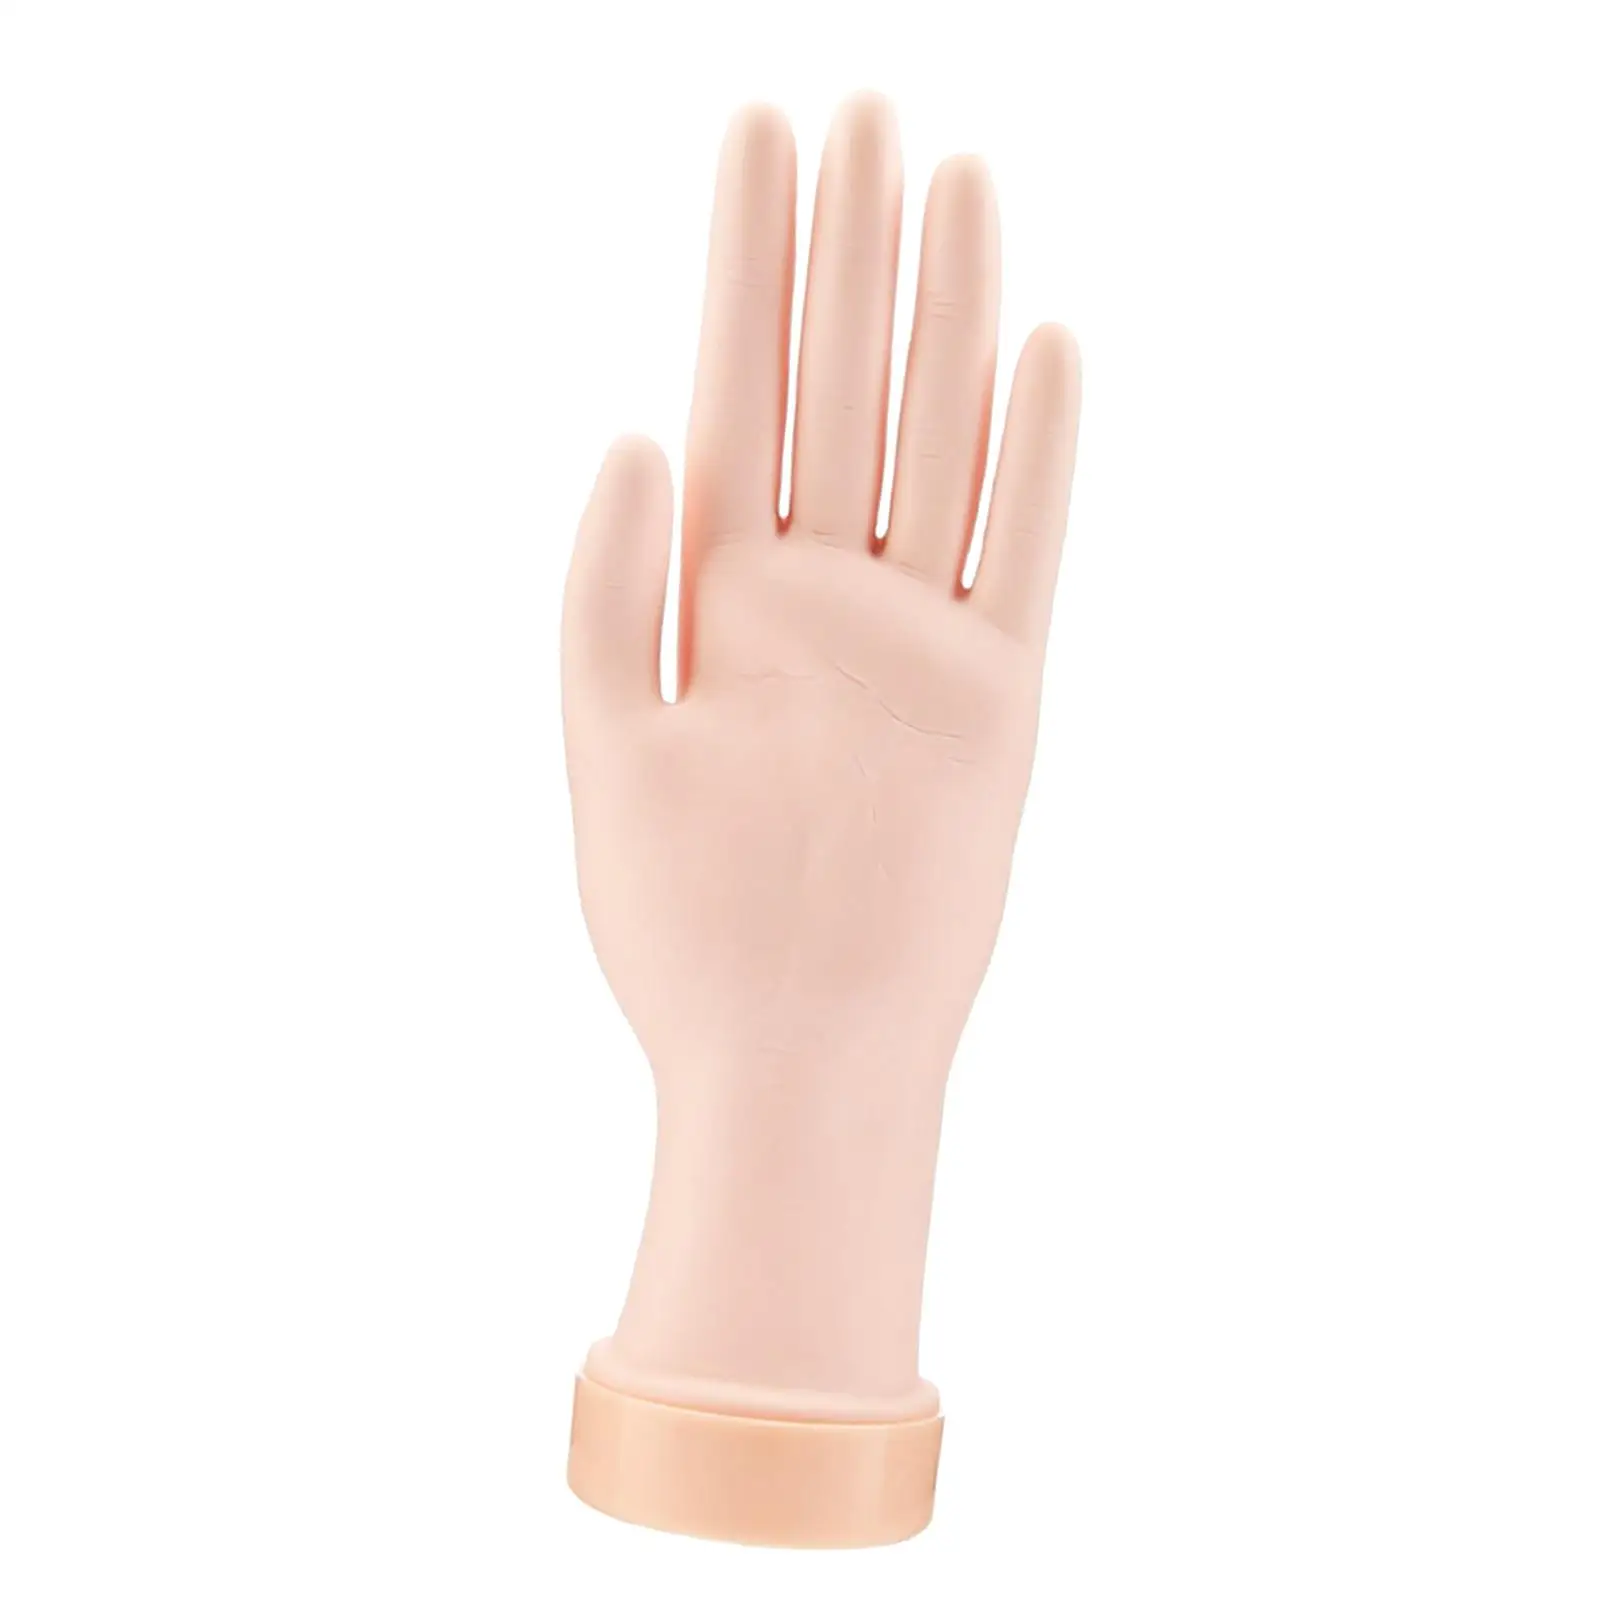 Bendable Nail Practice Hand Realistic Flexible Model Mannequin Hand for Salon Nail Art Design